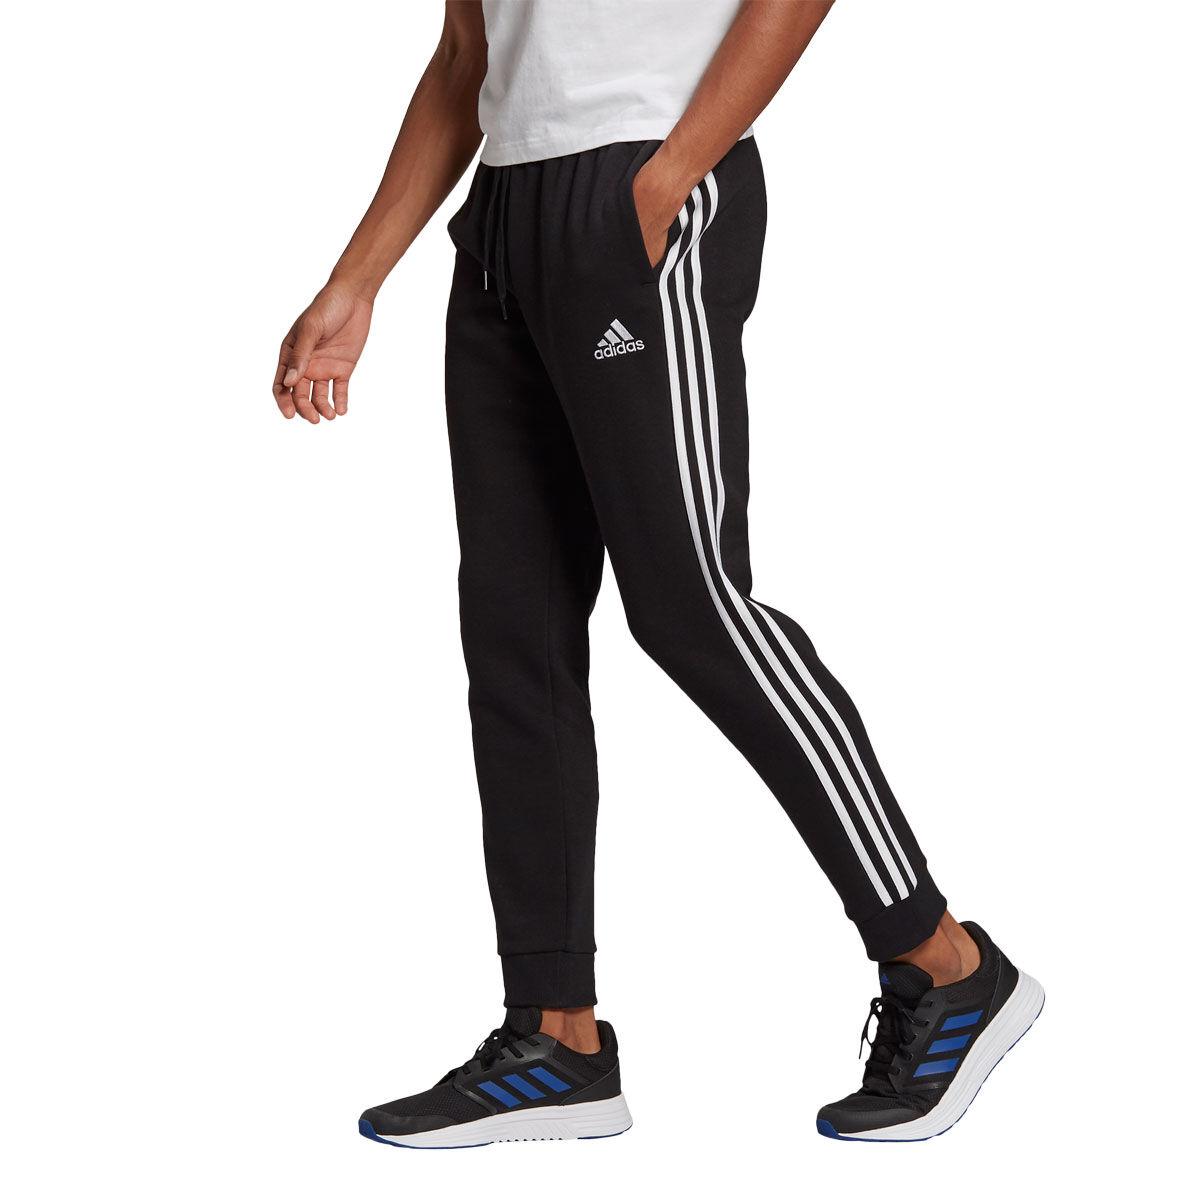 Quần Dài Chính Hãng - Adidas Originals Men's Trousers 3-Stripes 7/8 Pants  Casual Jogger Black -